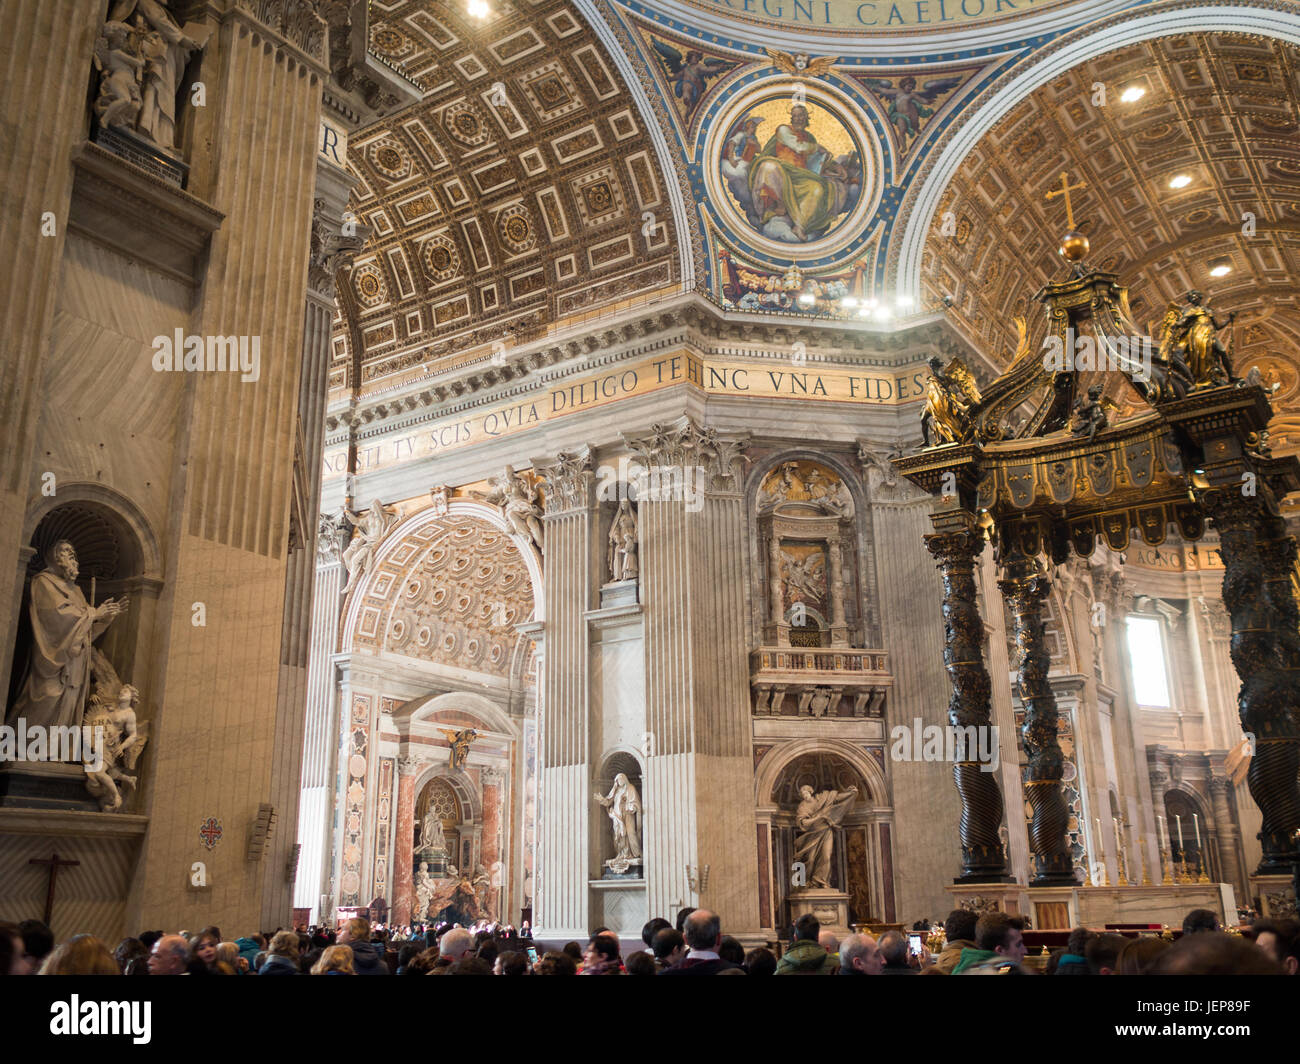 St. Peter's Basilica interior Stock Photo